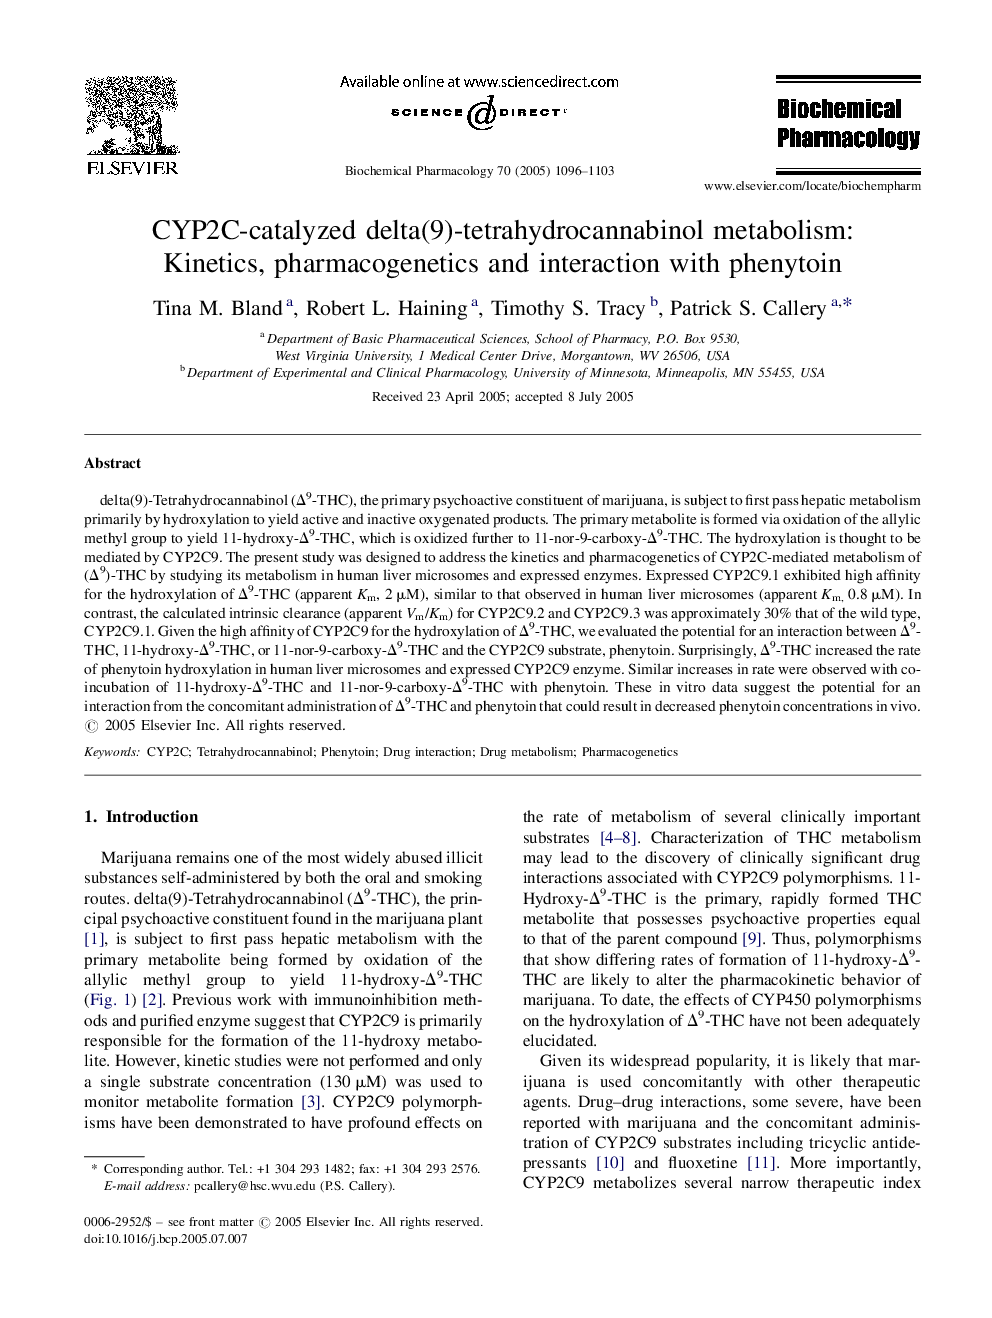 CYP2C-catalyzed delta(9)-tetrahydrocannabinol metabolism: Kinetics, pharmacogenetics and interaction with phenytoin